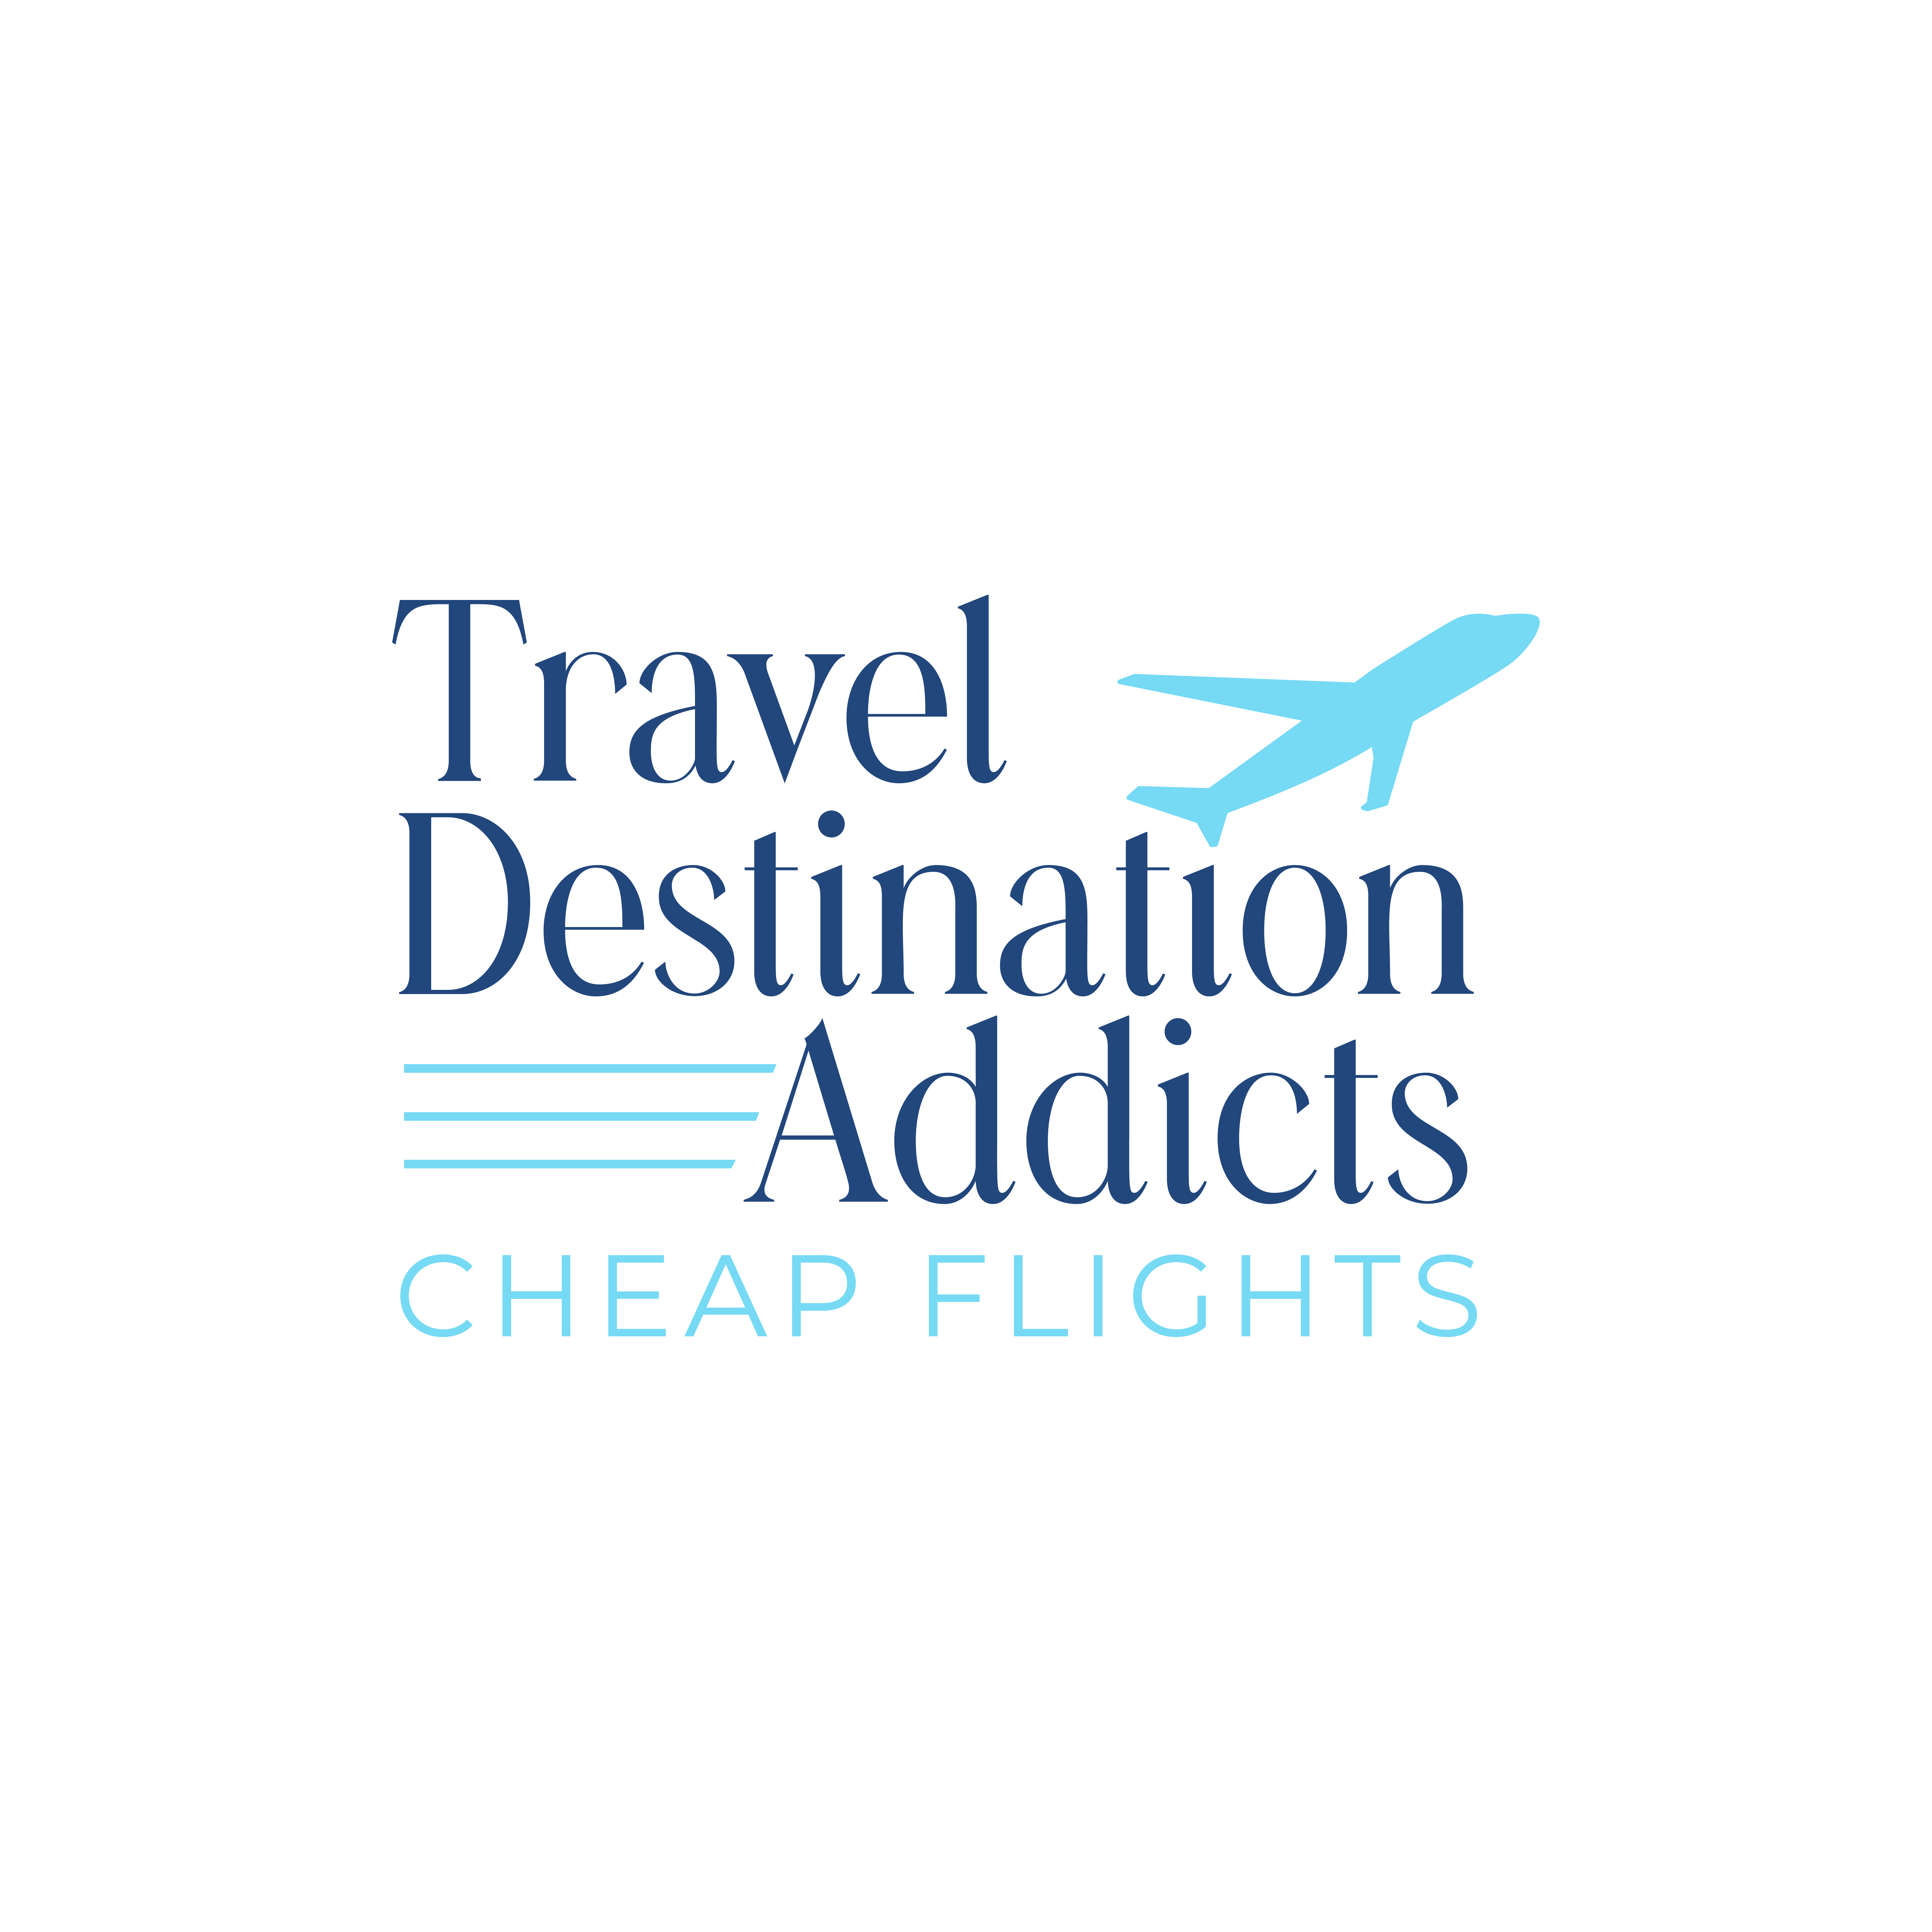 About Travel Destination Addicts